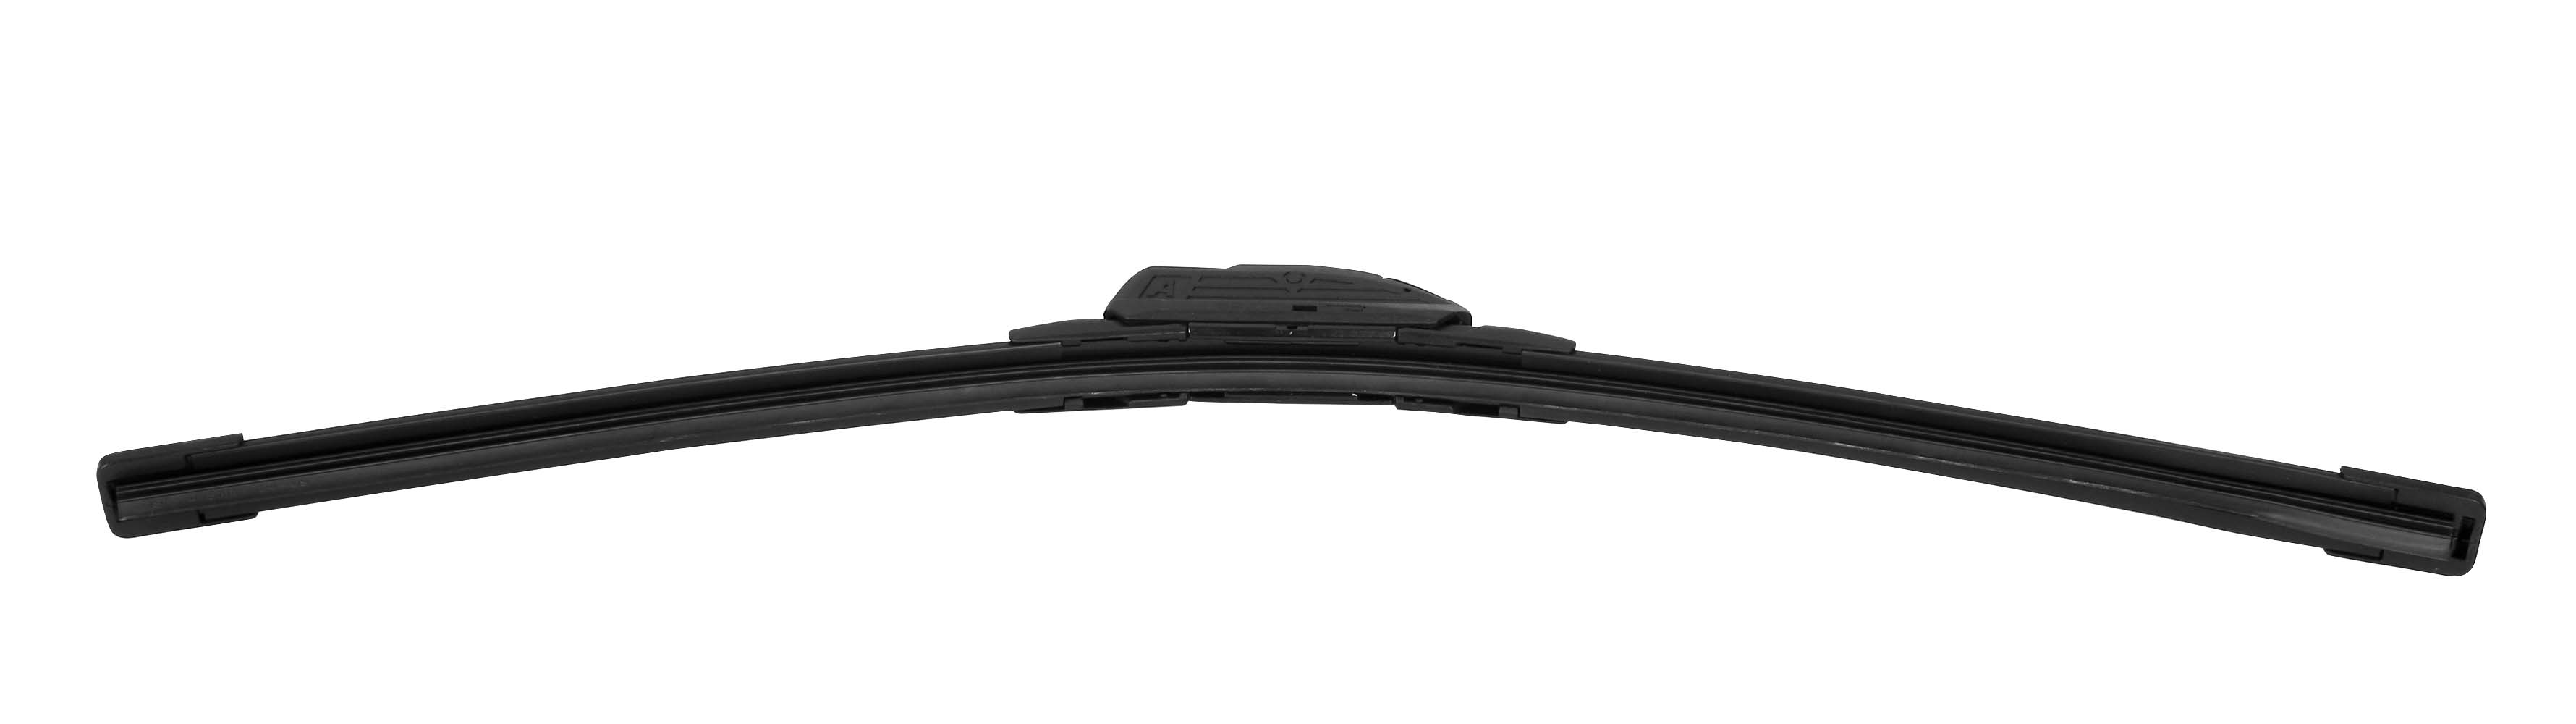 Filson wiper blade 8 adaptors 61 cm (24“) - 1 pcs thumb